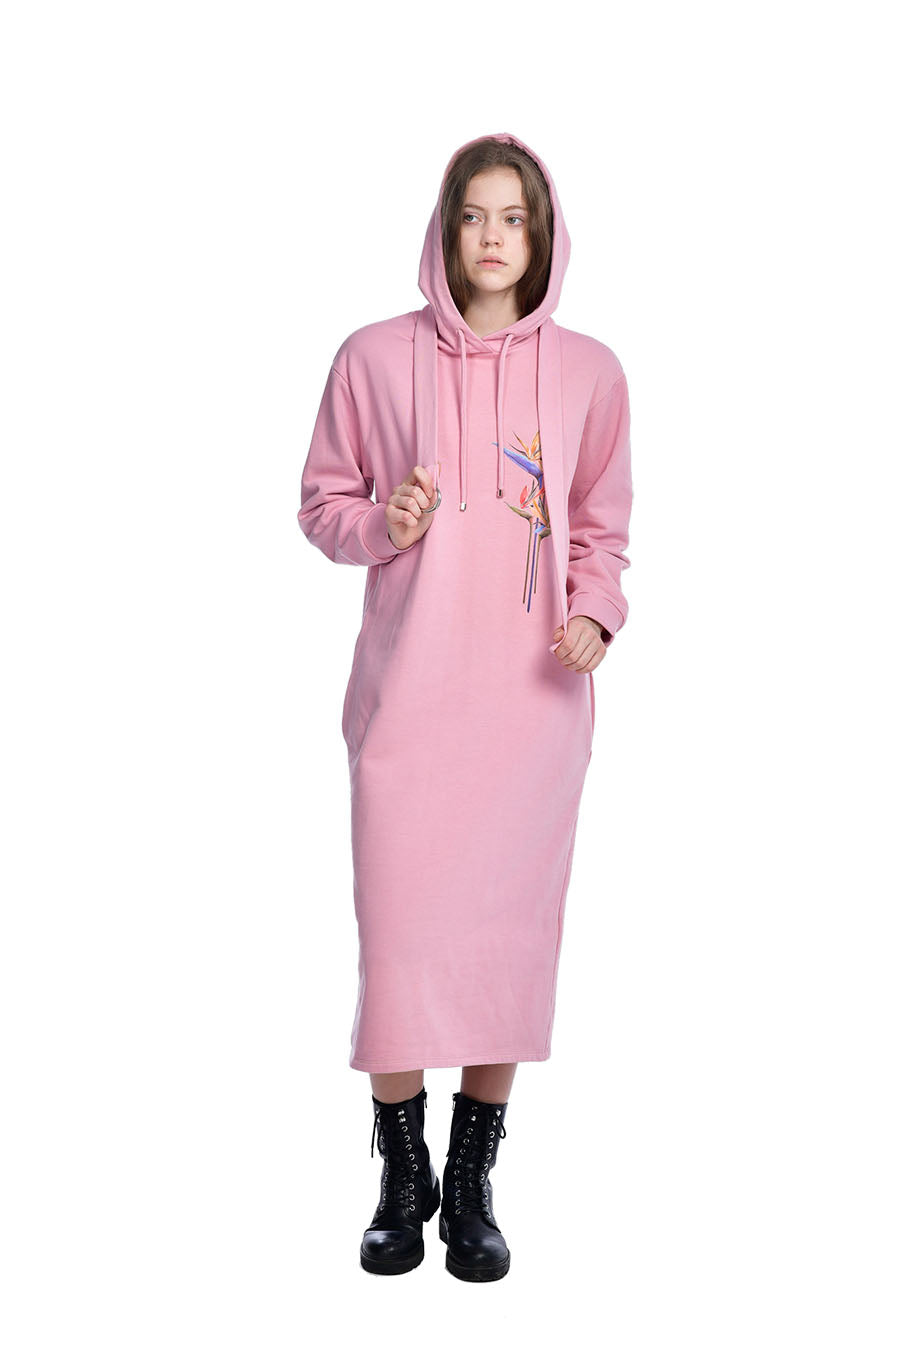 Model Wearing Hoodie Dress - Strelitzia Pink 